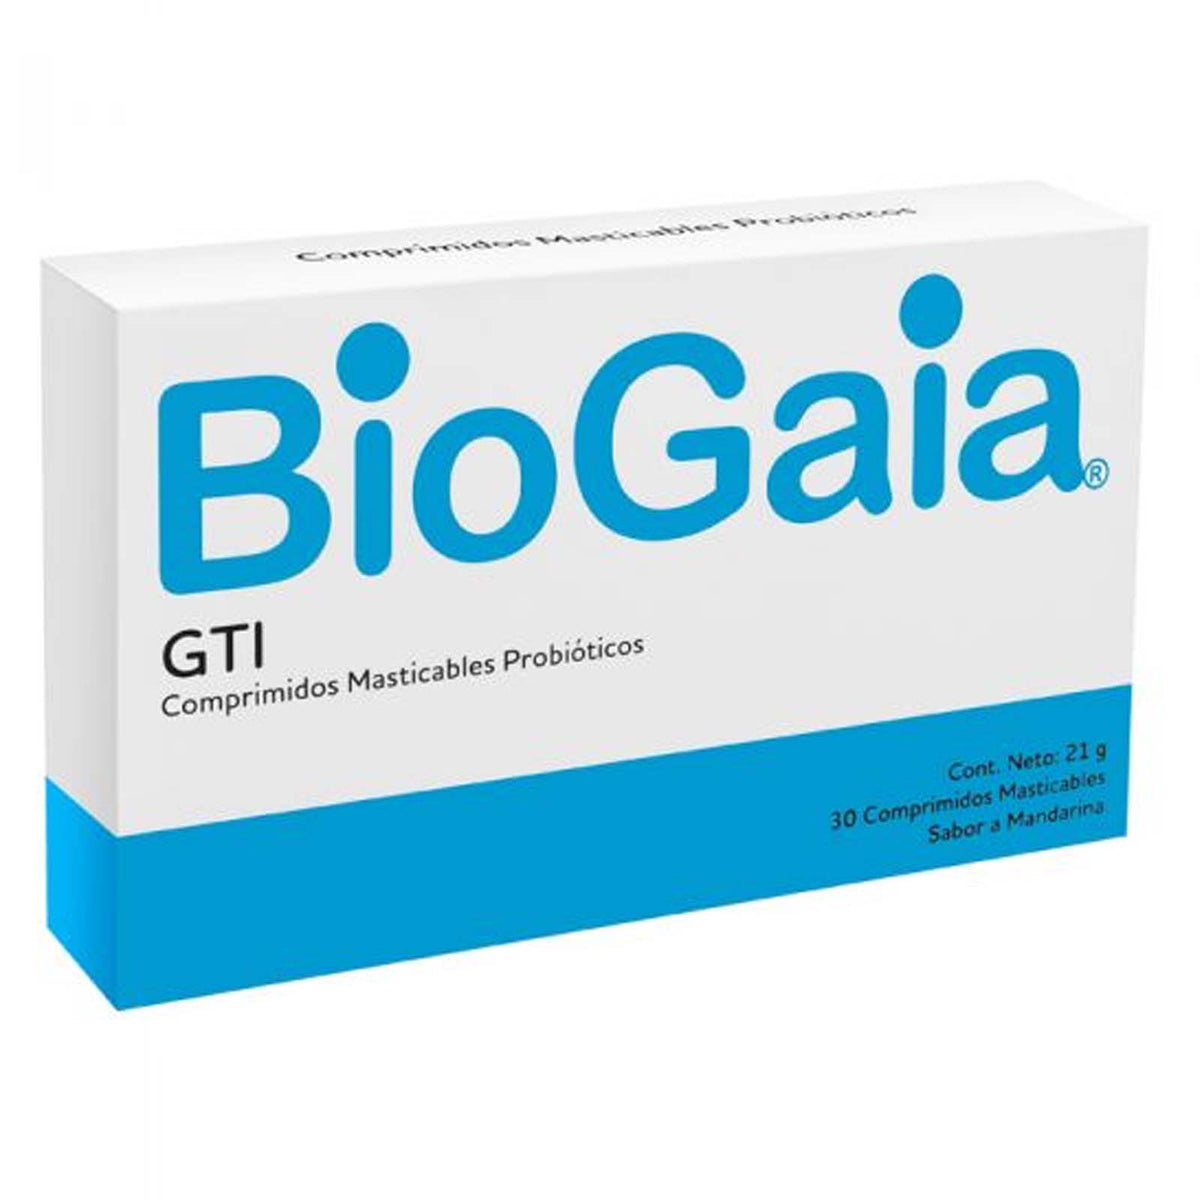 Biogaia GTI Comprimidos Masticasbles